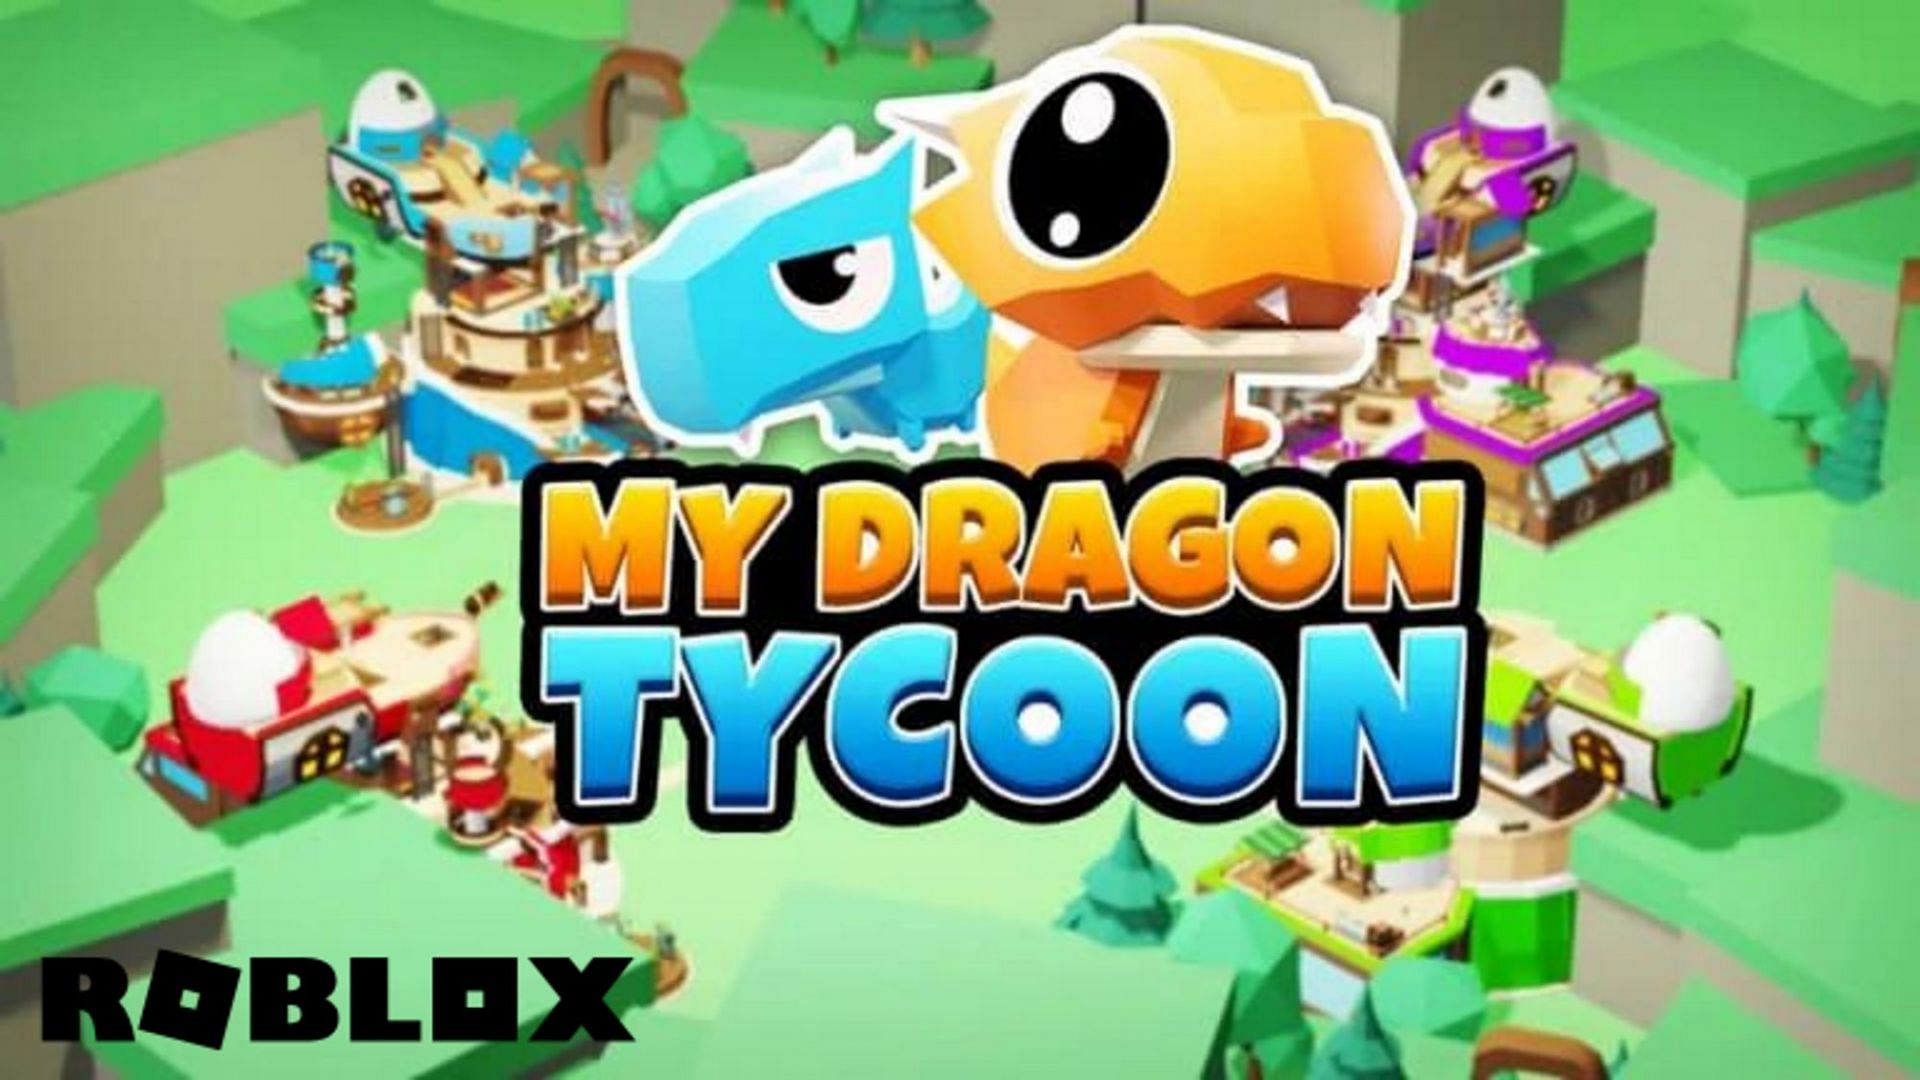 Roblox My Dragon Tycoon codes to redeem free rewards (Image via Roblox)